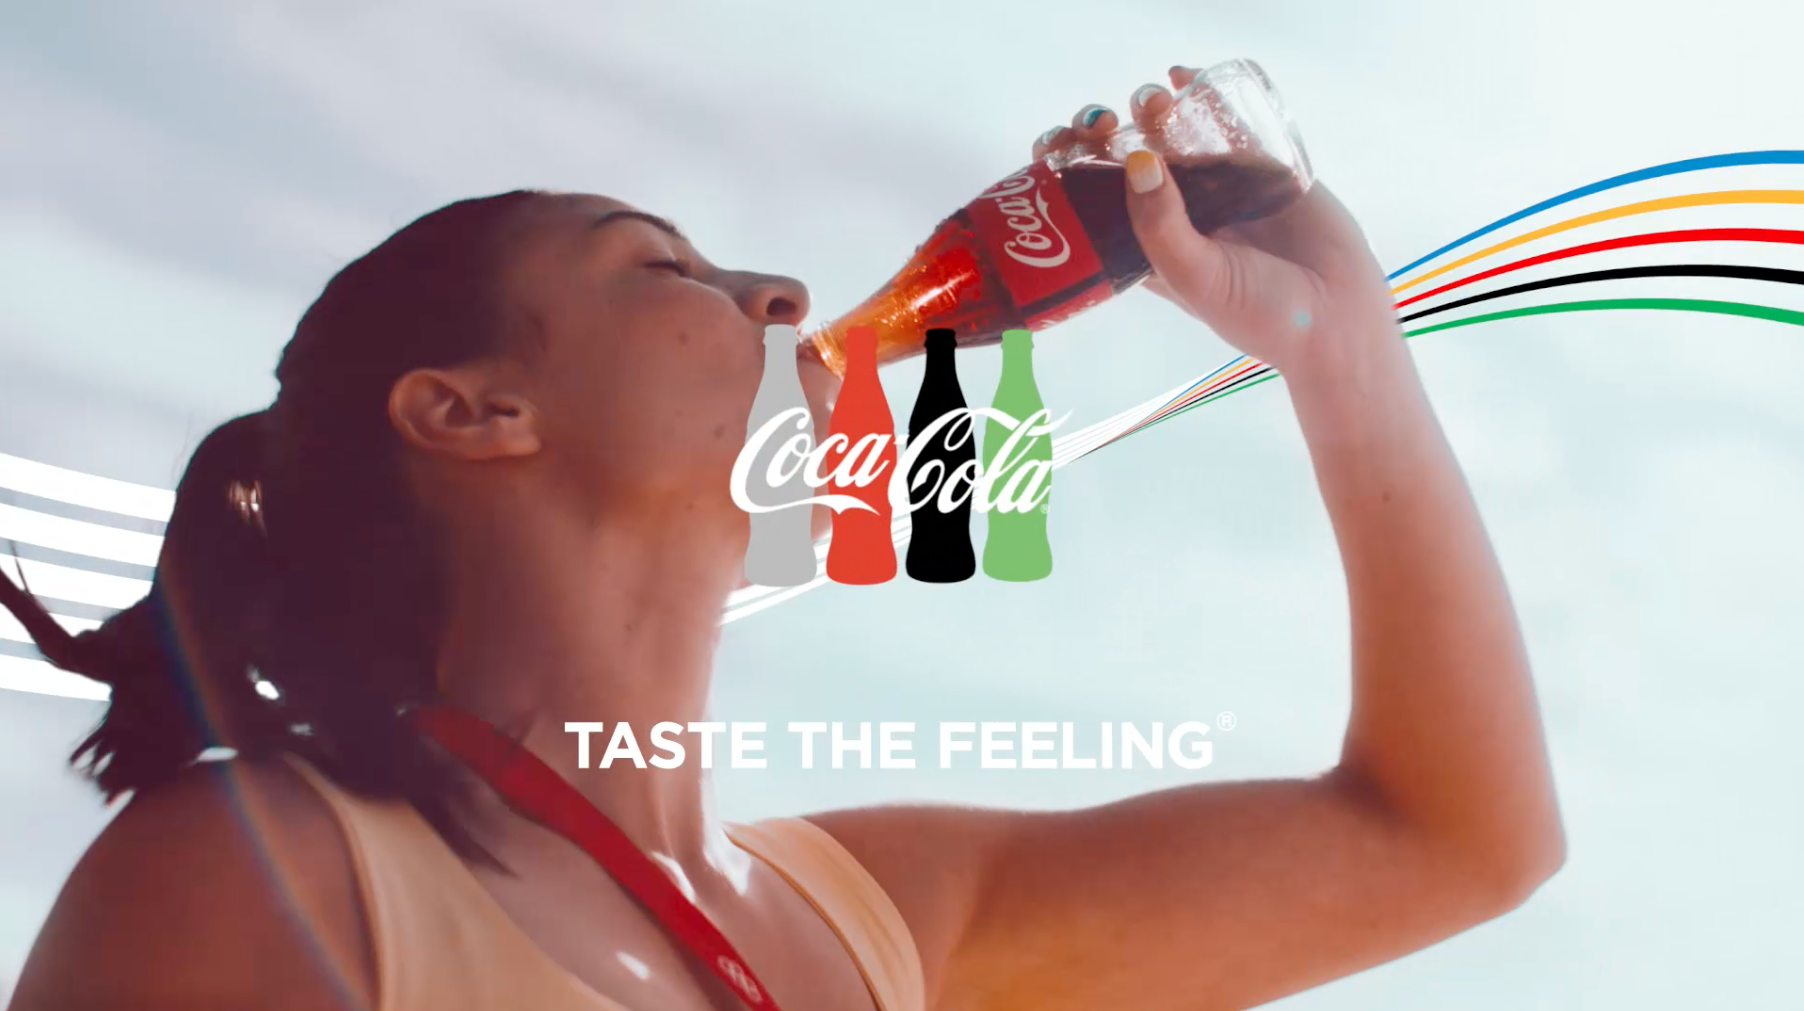 Taste the feeling. Coca Cola taste the feeling. Девушка с Кока колой. Эмоции в рекламе Кока колы. Реклама Кока колы с девушкой на пляже.